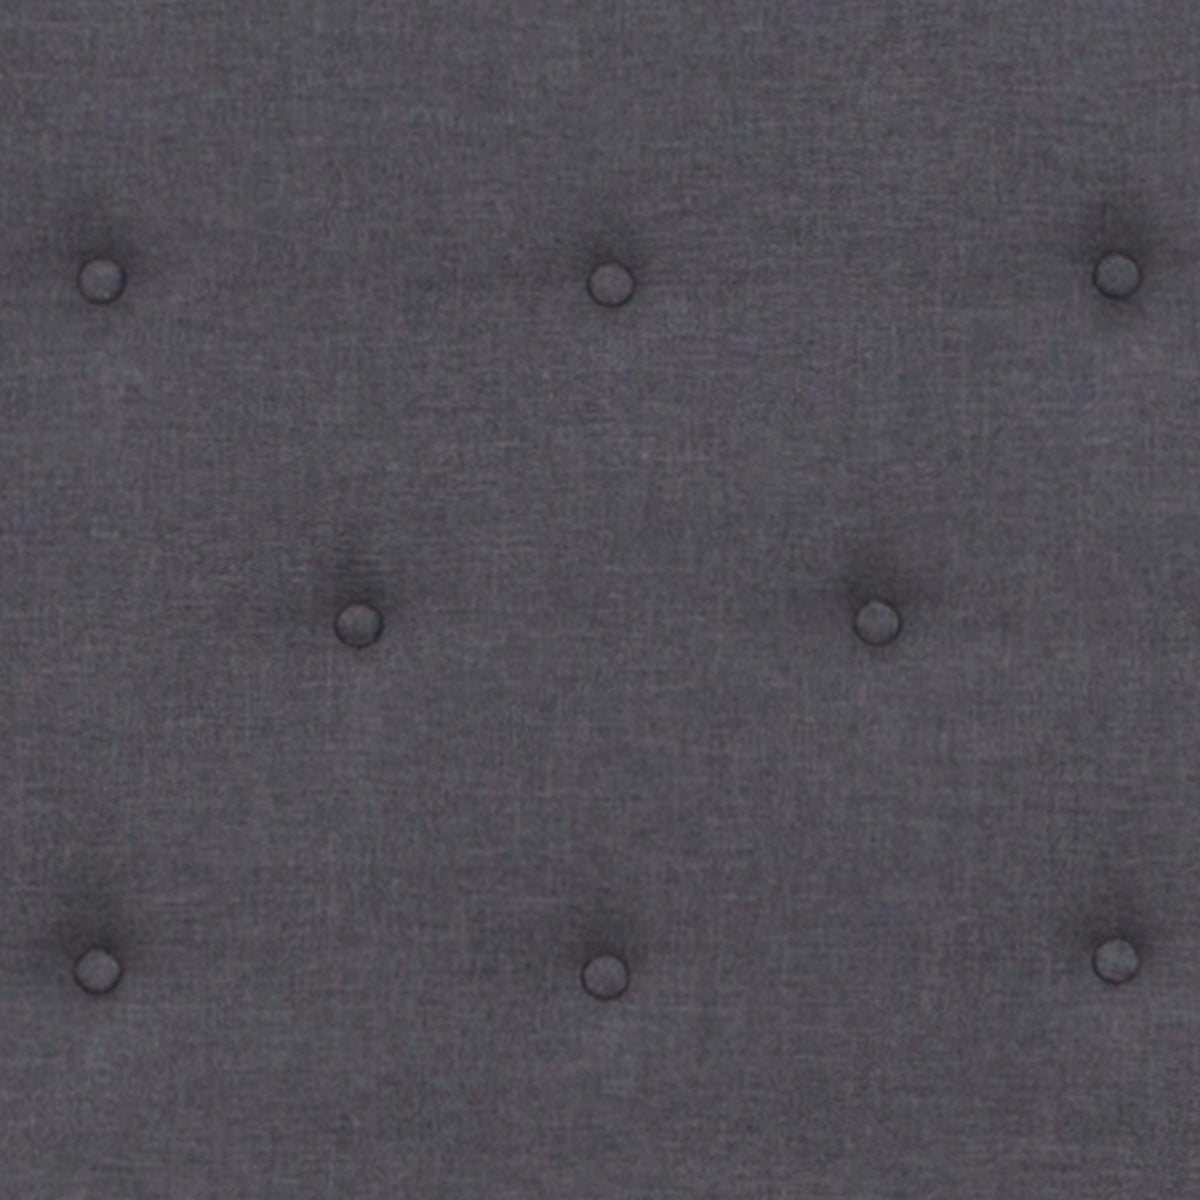 Dark Gray,Queen |#| Queen Tufted Platform Bed in Dark Gray Fabric with 10in. Pocket Spring Mattress